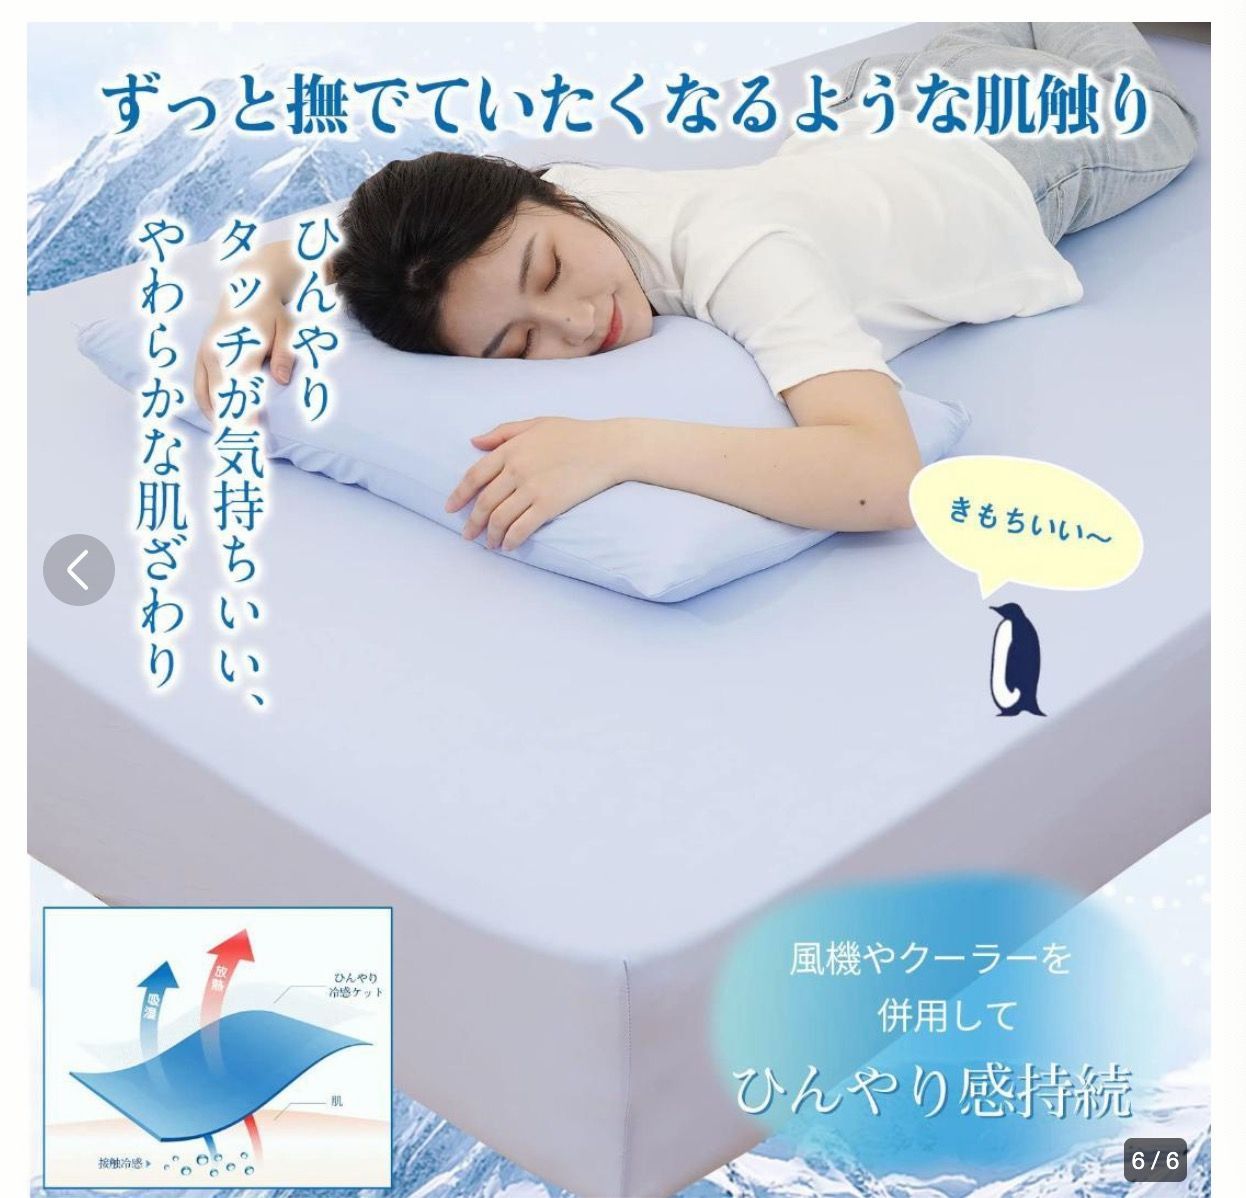 Arc-Chill 冷却枕 冷感テク 接触冷感 枕カバー  熱中症対策